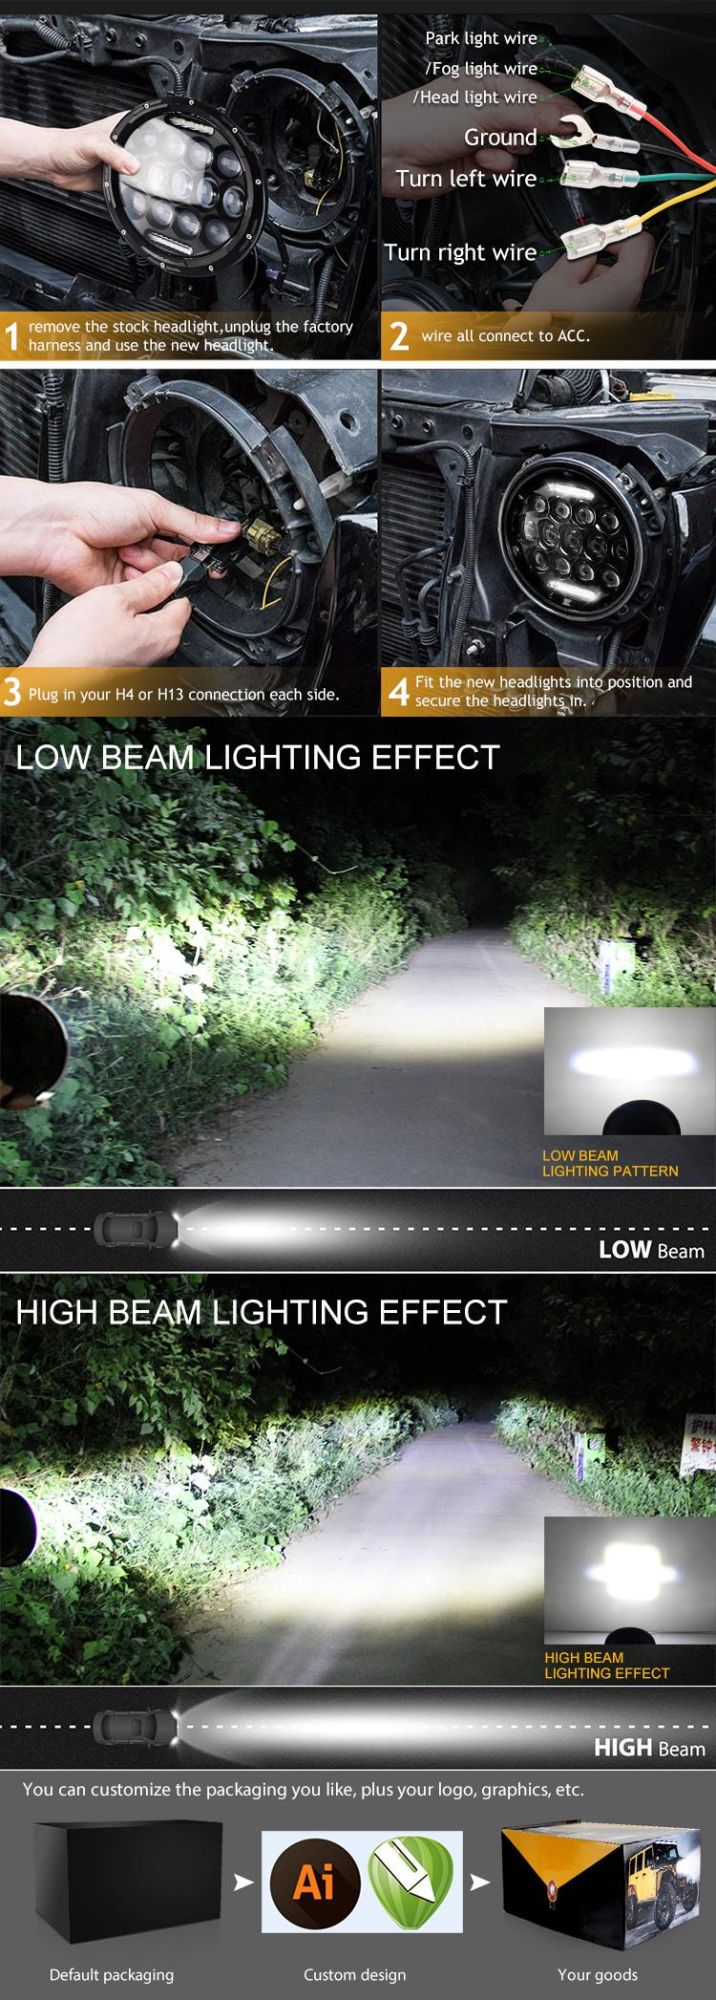 RGB 4X4 Offroad Jeep Wrangler 7inch LED Faros LED Headlight